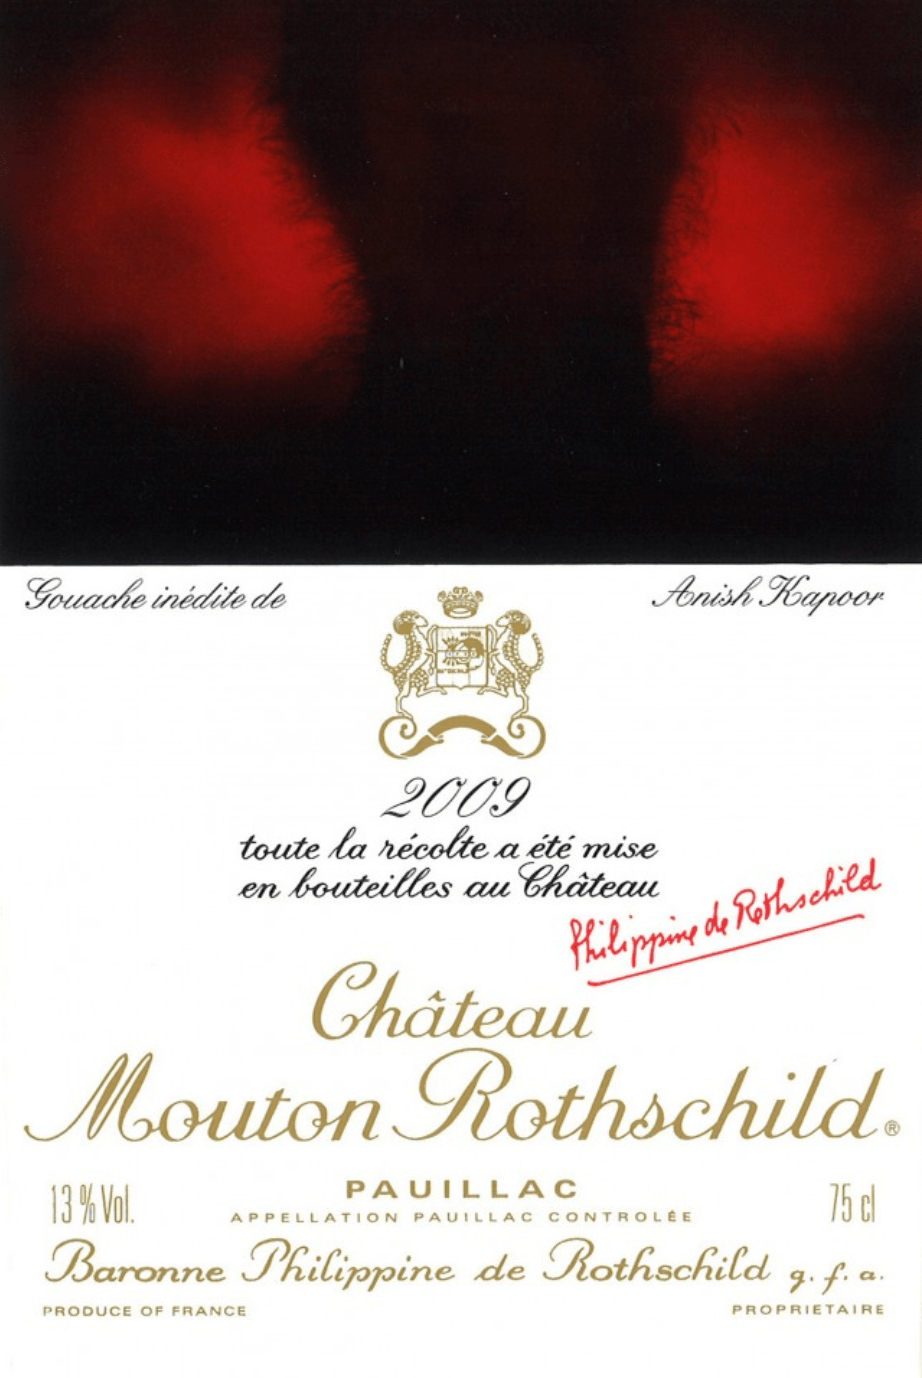 Anish Kapoor per Mouton Rothschild 